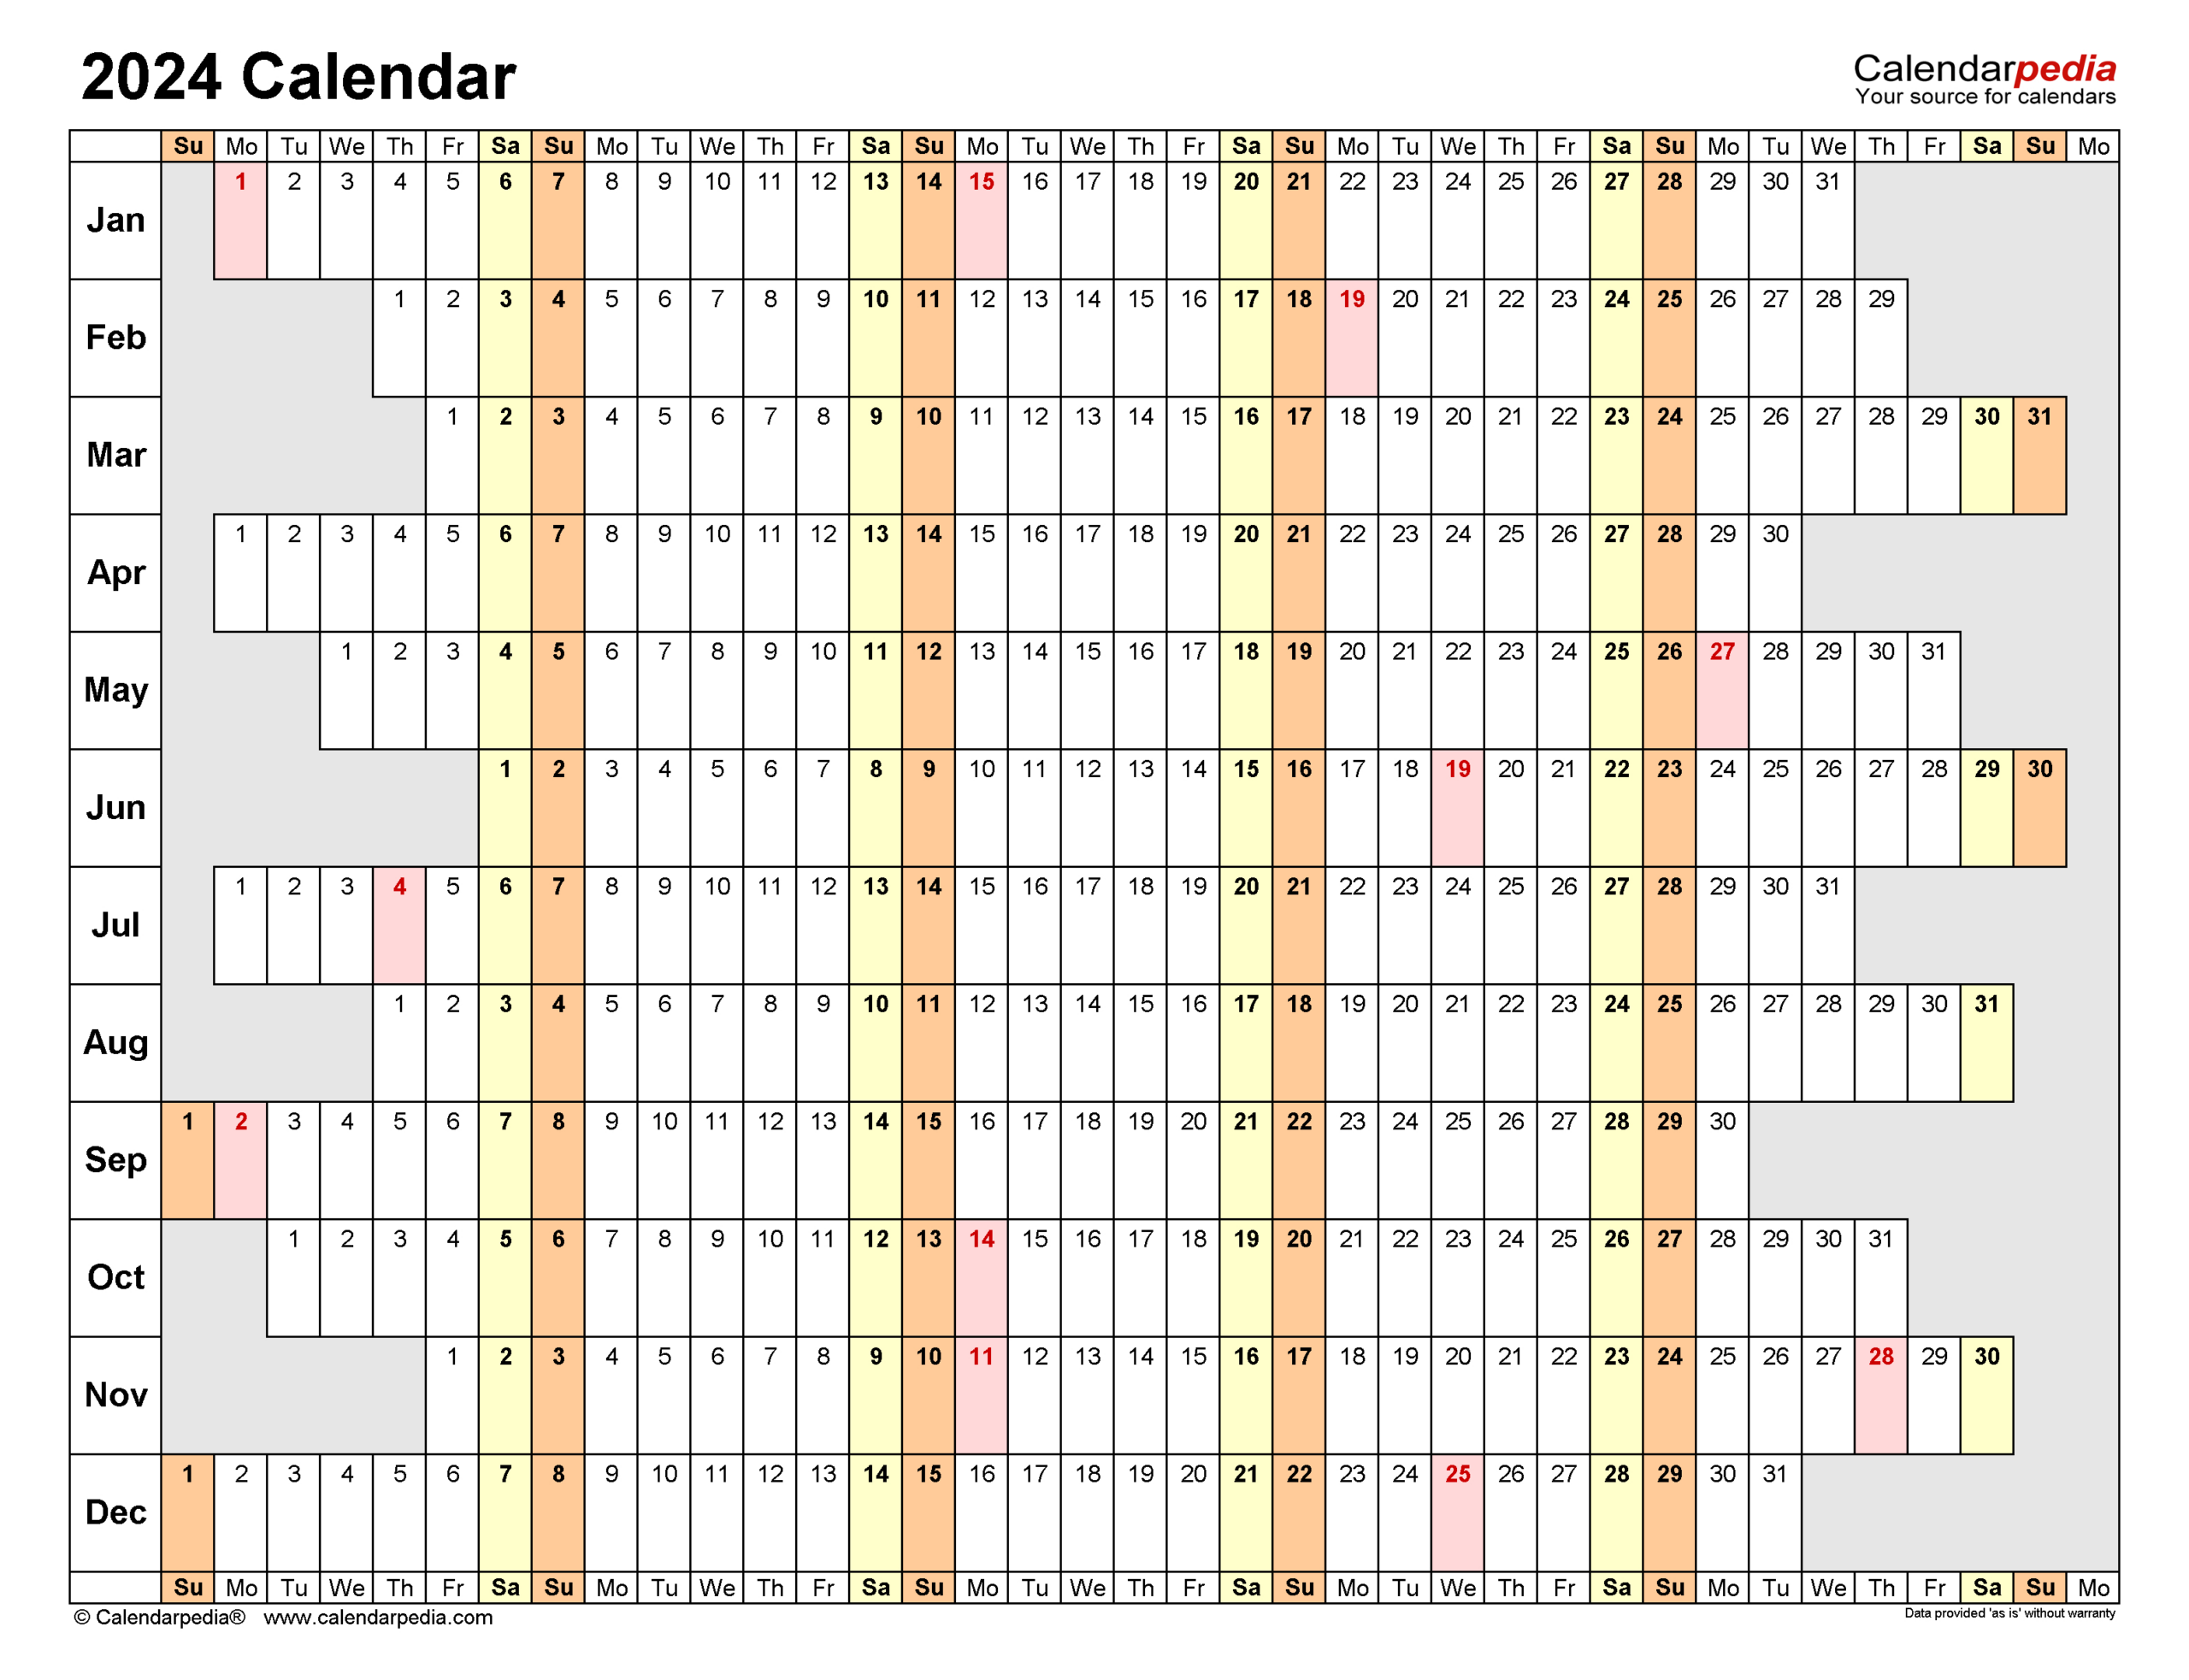 2024 Calendar - Free Printable Excel Templates - Calendarpedia | Wincalendar Free Printable Calendar 2024